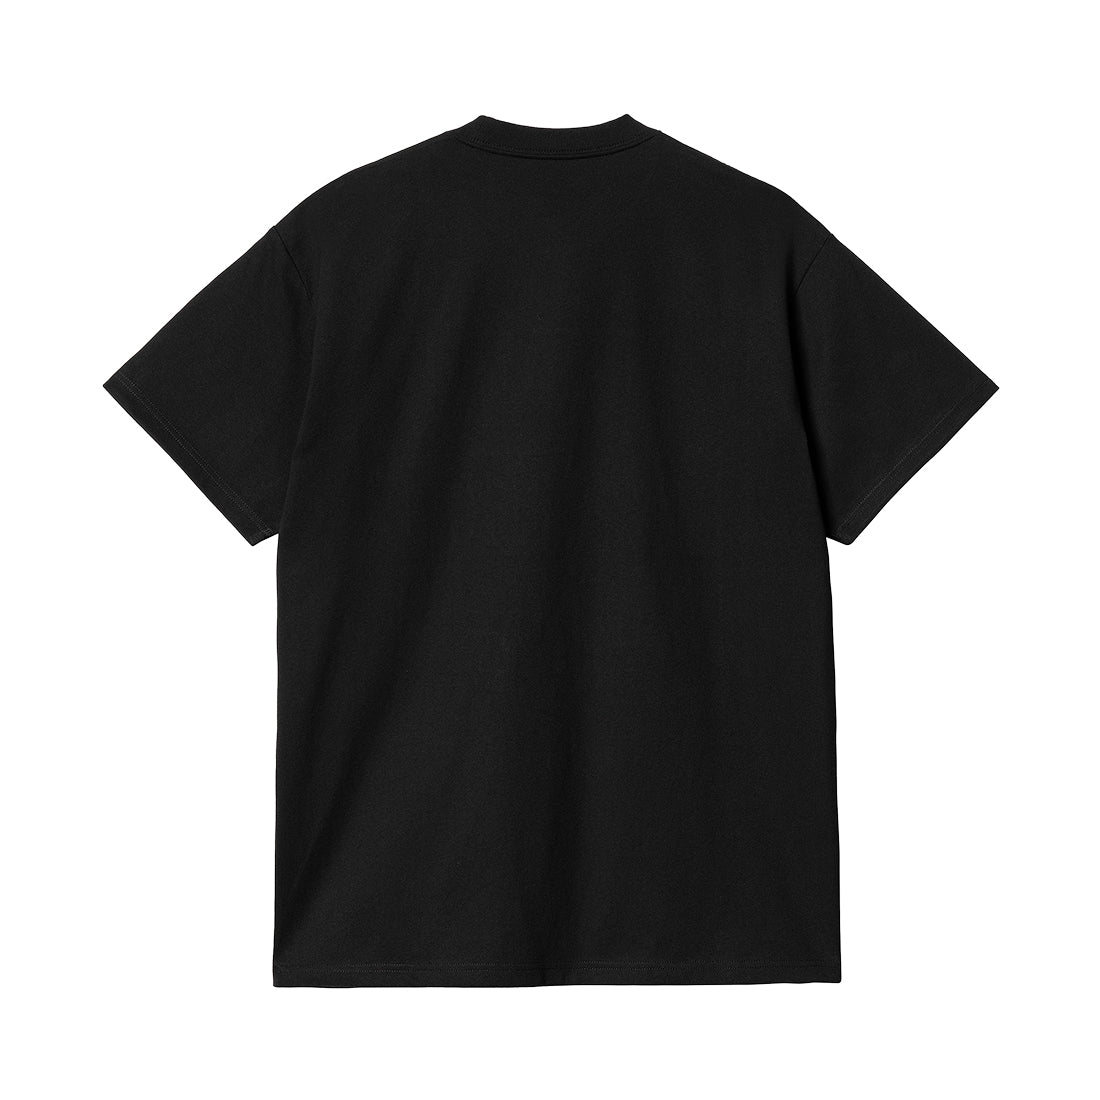 S/S Wiles T-Shirt Black